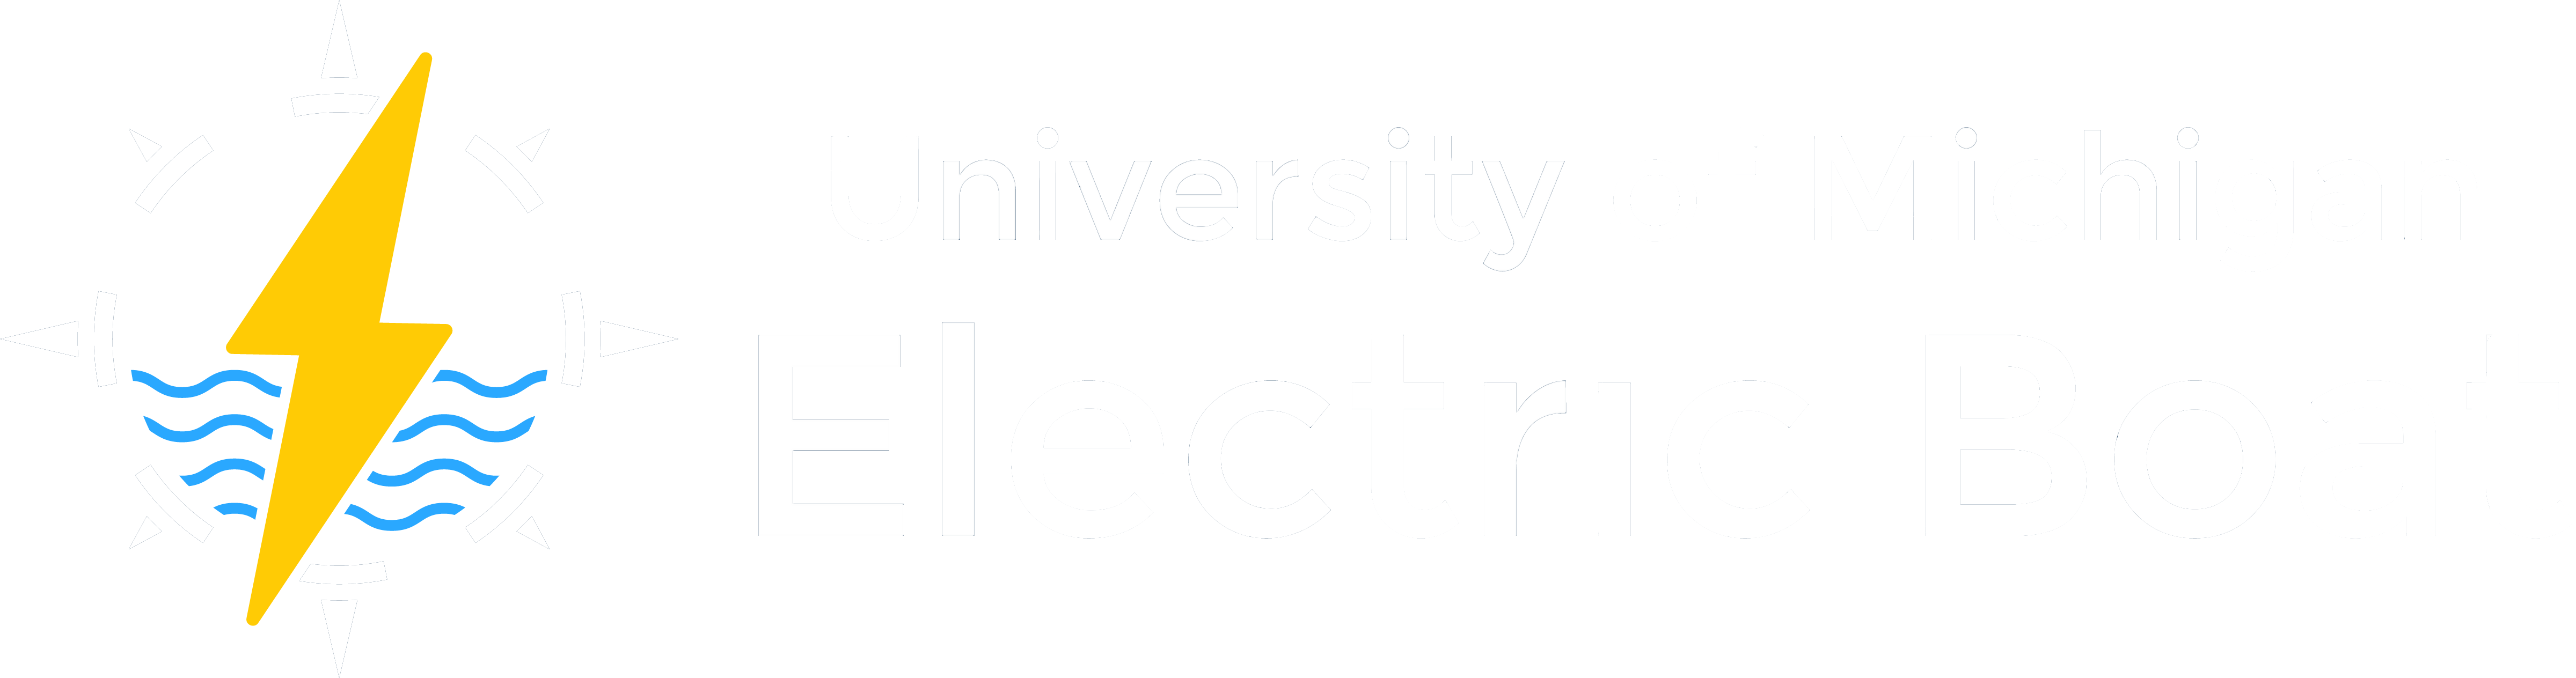 University of Michigan Electric Boat Logo